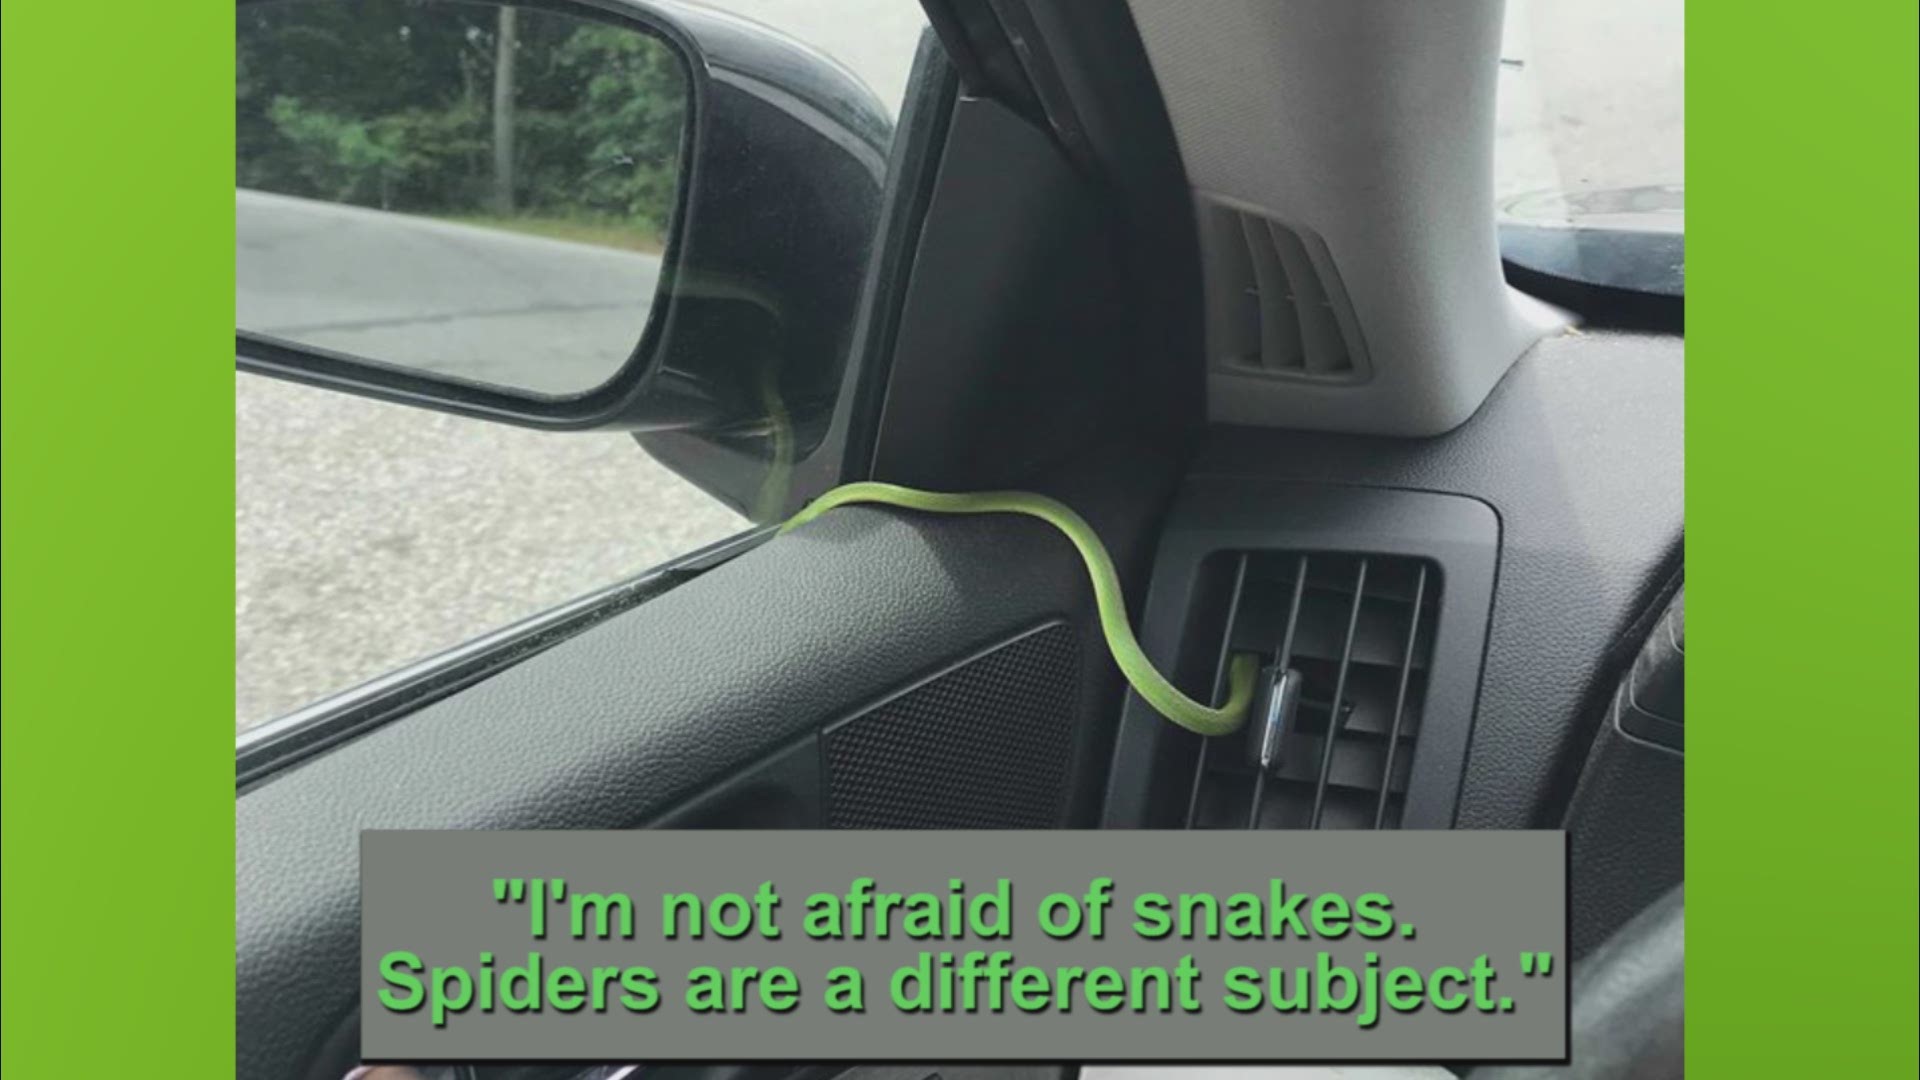 SC man captures snake in car vent on video